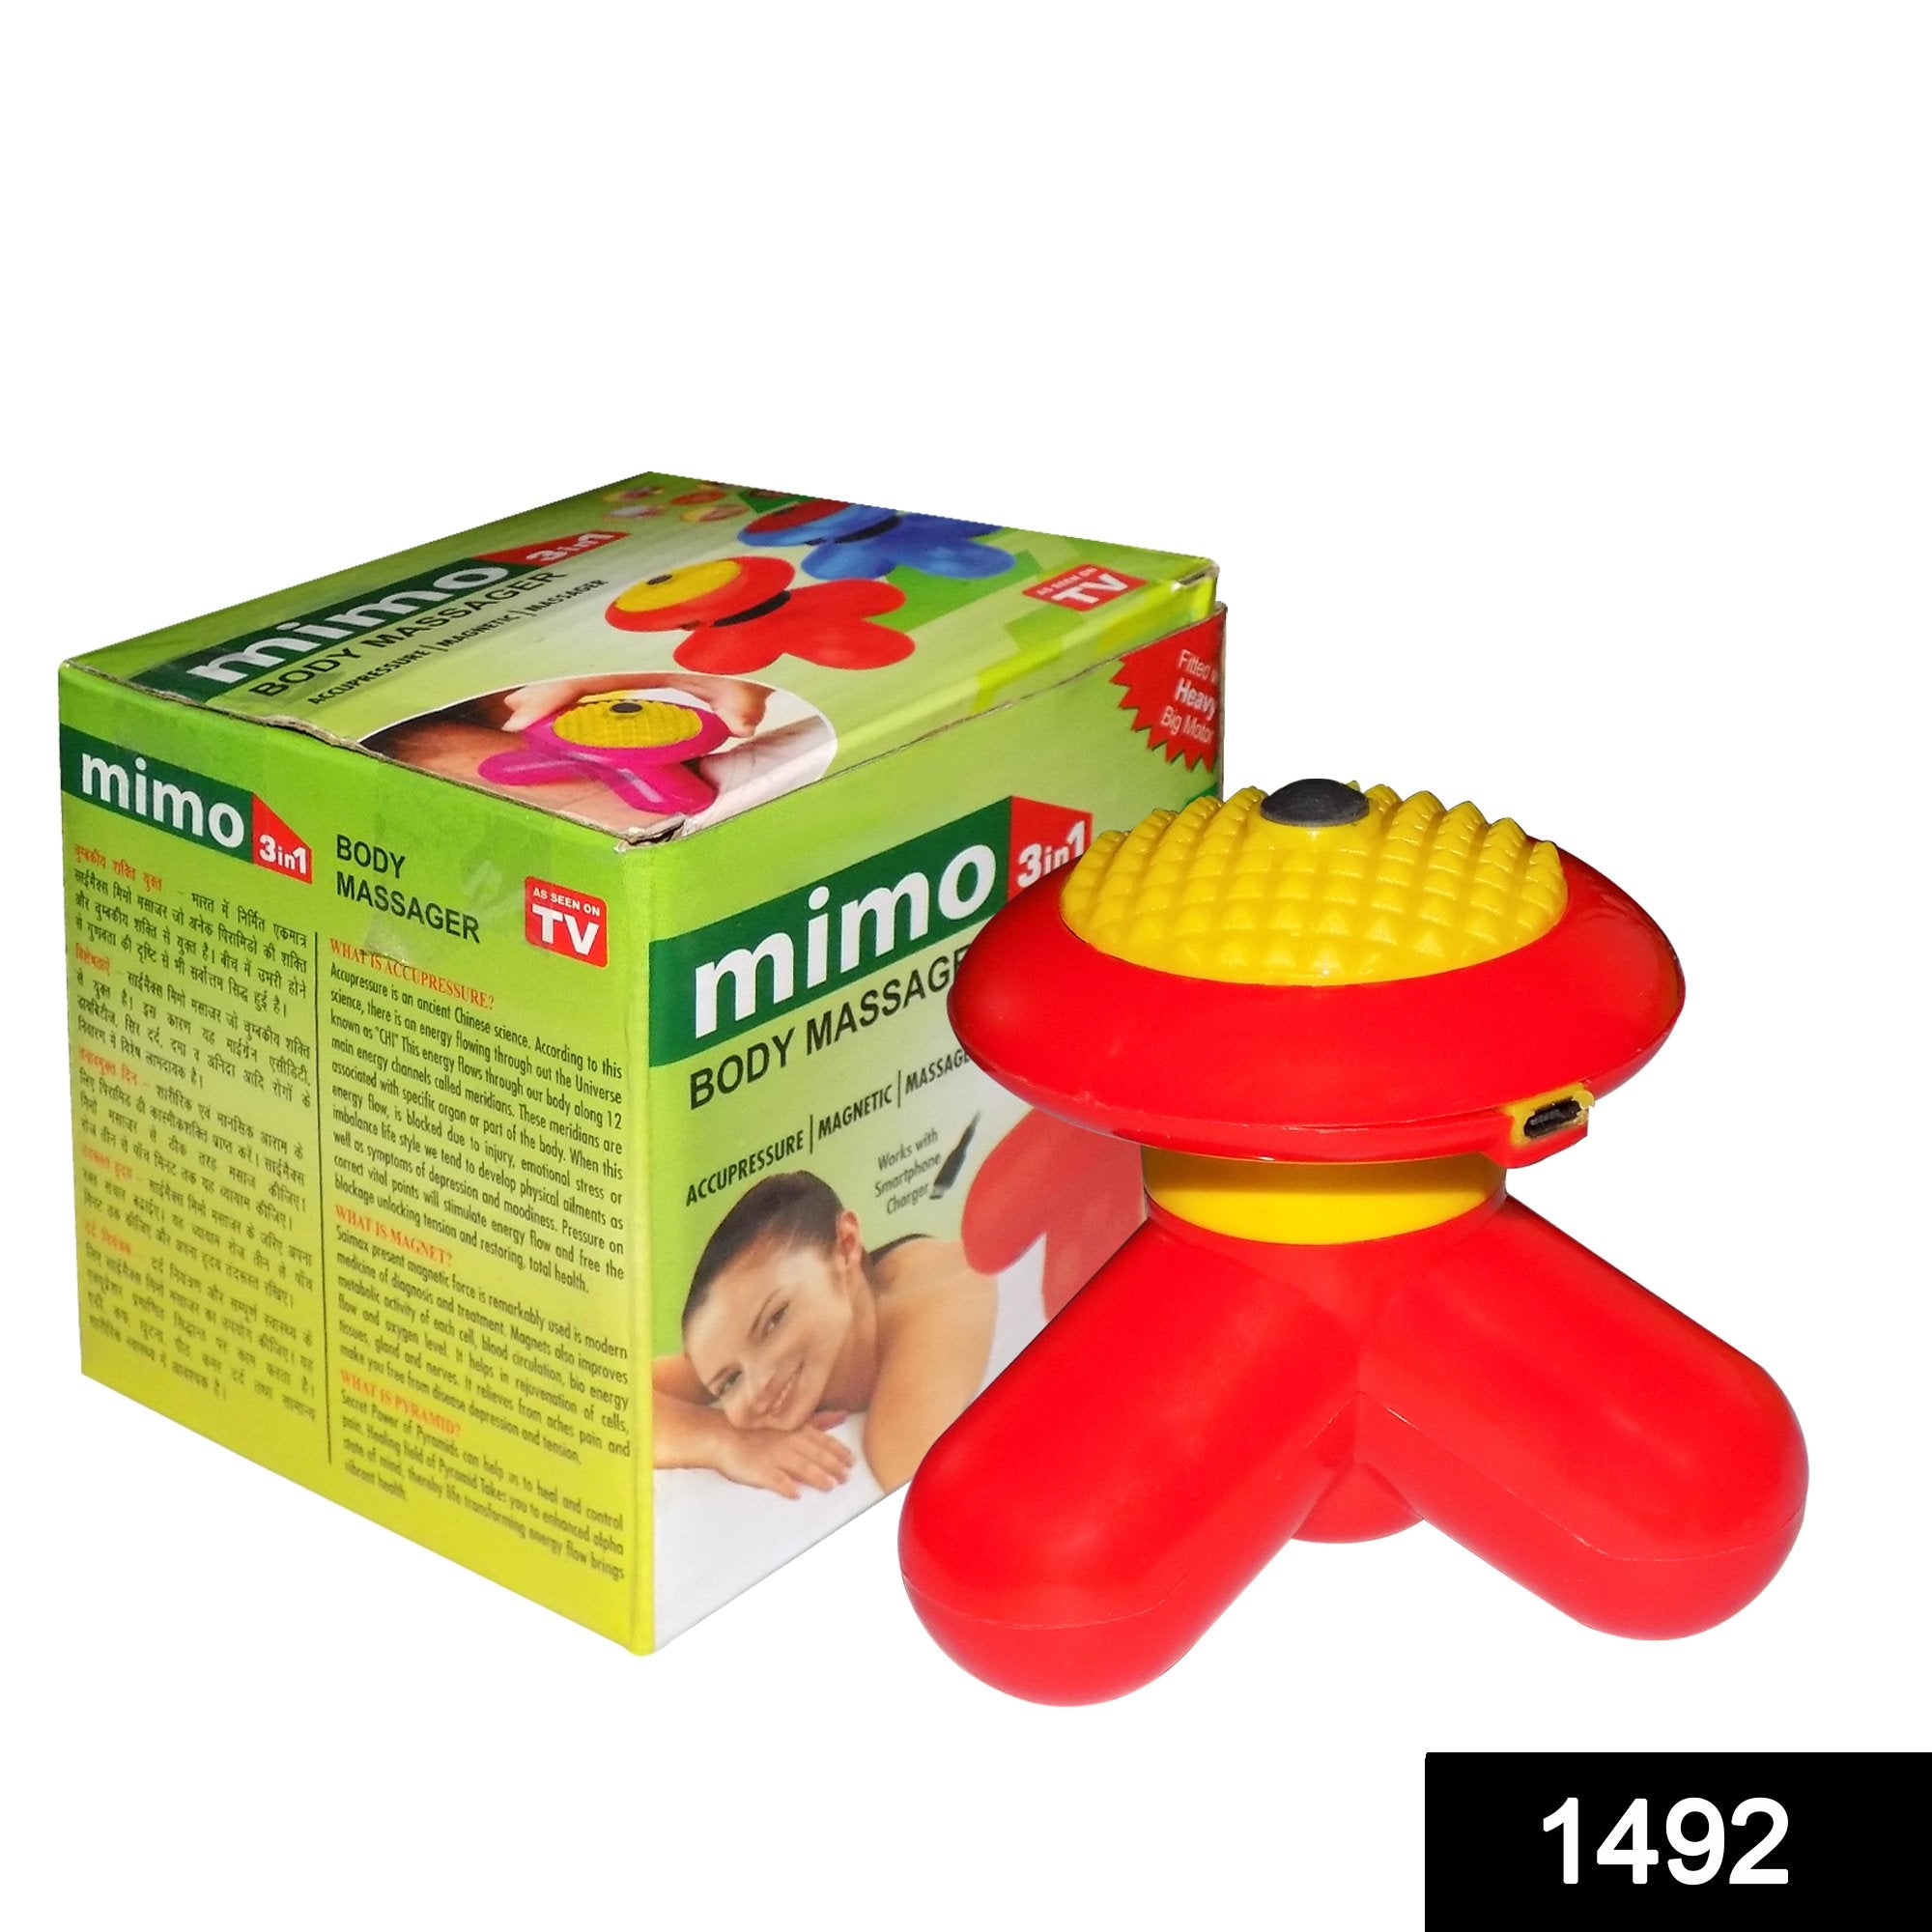 1492 Mimo Mini Full Body Vibration Massager Portable Compact